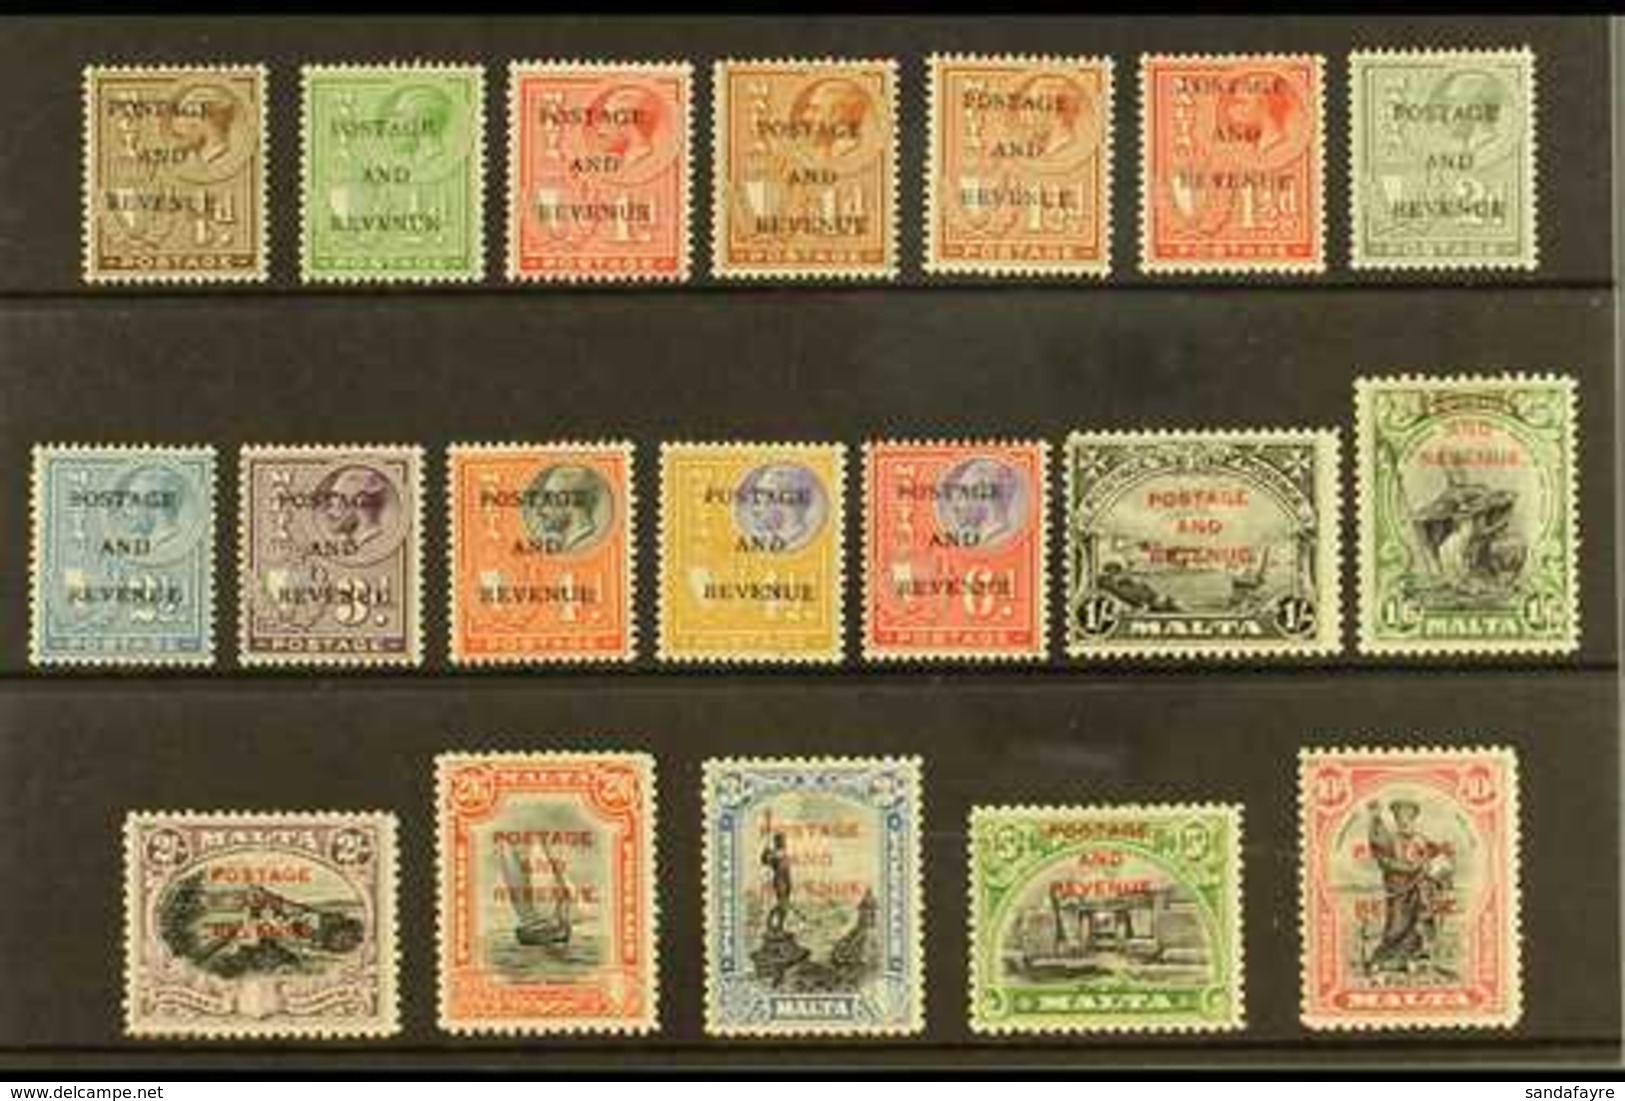 1928 "POSTAGE AND REVENUE" Overprints Complete Definitive Set, SG 174/192, Fine Mint. (19 Stamps) For More Images, Pleas - Malta (...-1964)